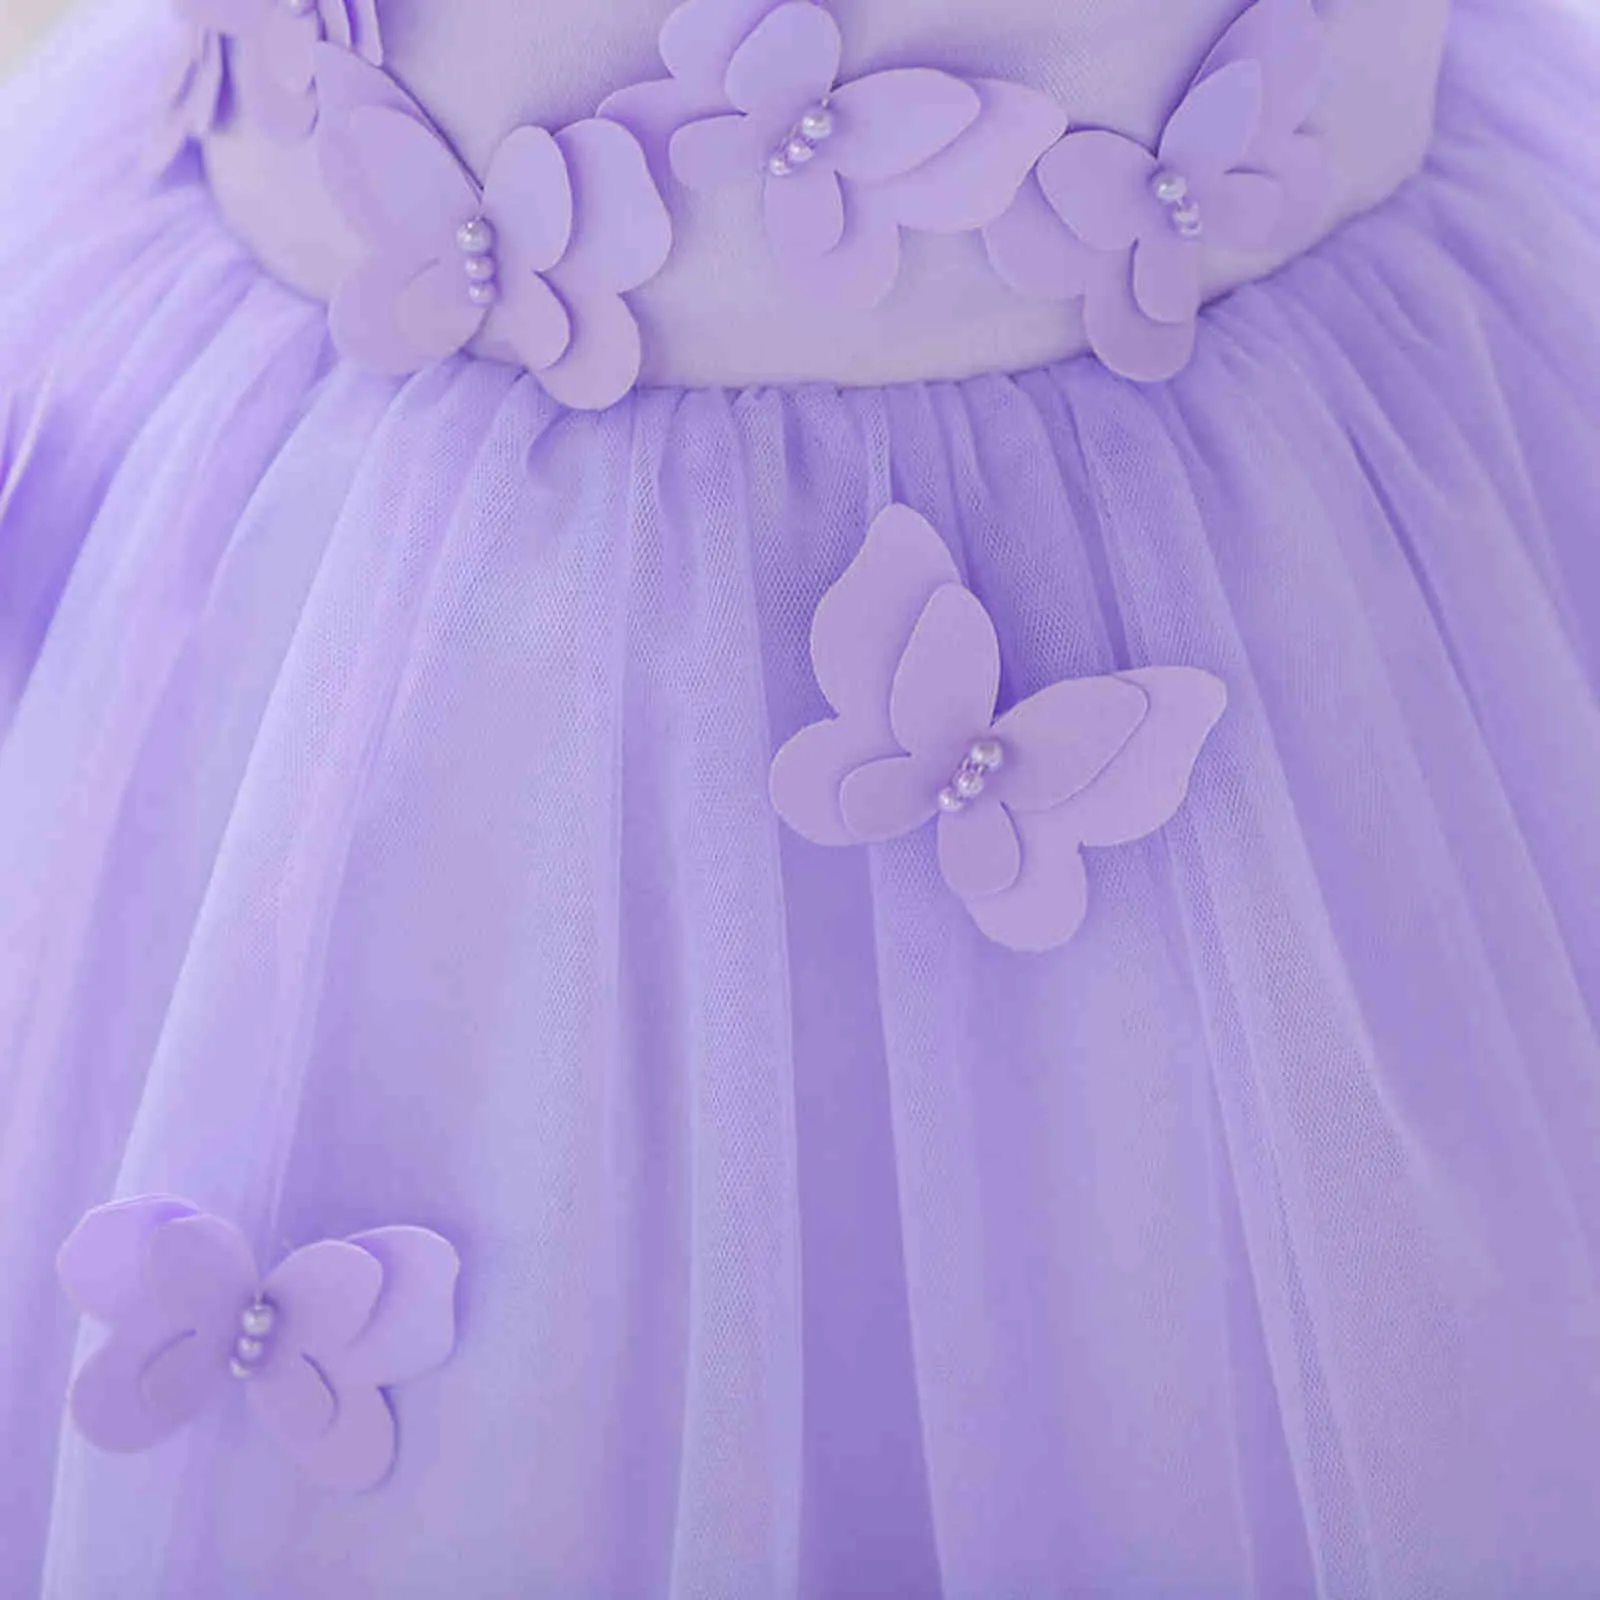 Bebê borboleta borbolista vestido vestido de aniversário para 1 ano bebê menina roupa casamento casamento dama de honra princesa vestido vestidos g1129